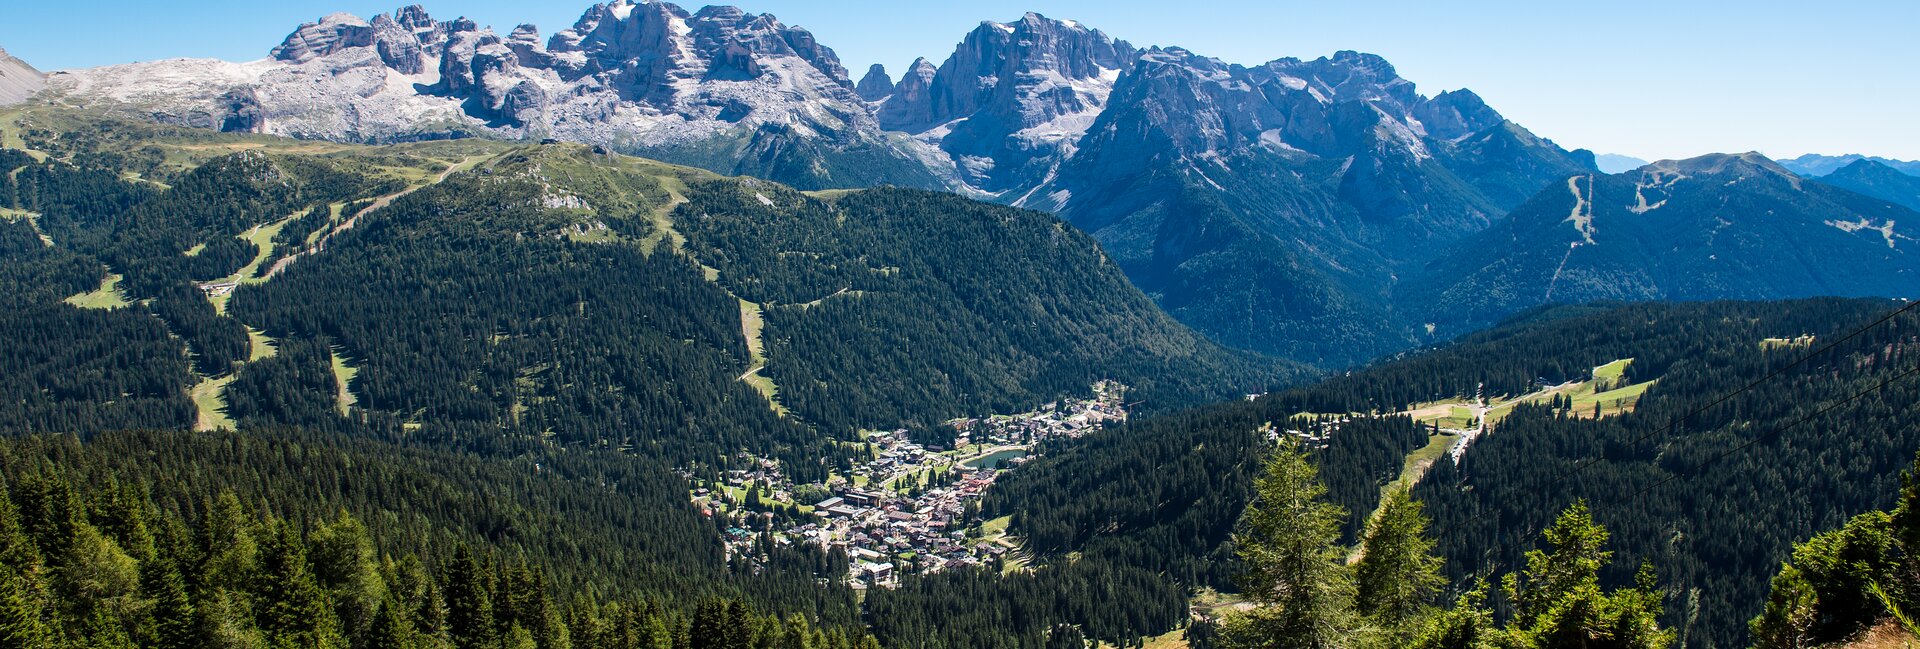 Madonna di Campiglio - Italské Alpy v létě